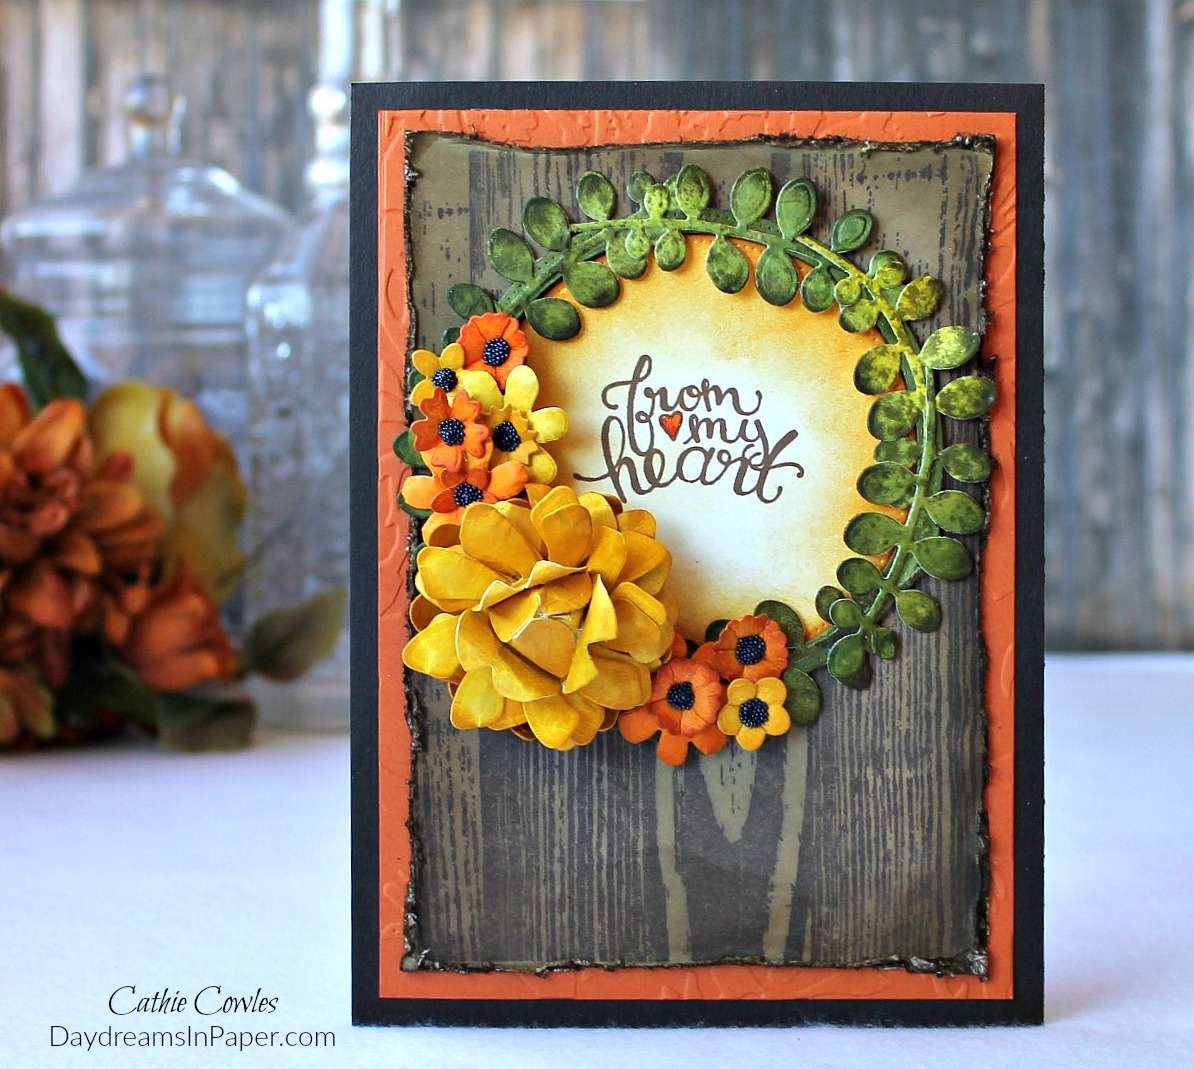 Handmade card with wreath and handmade flowers